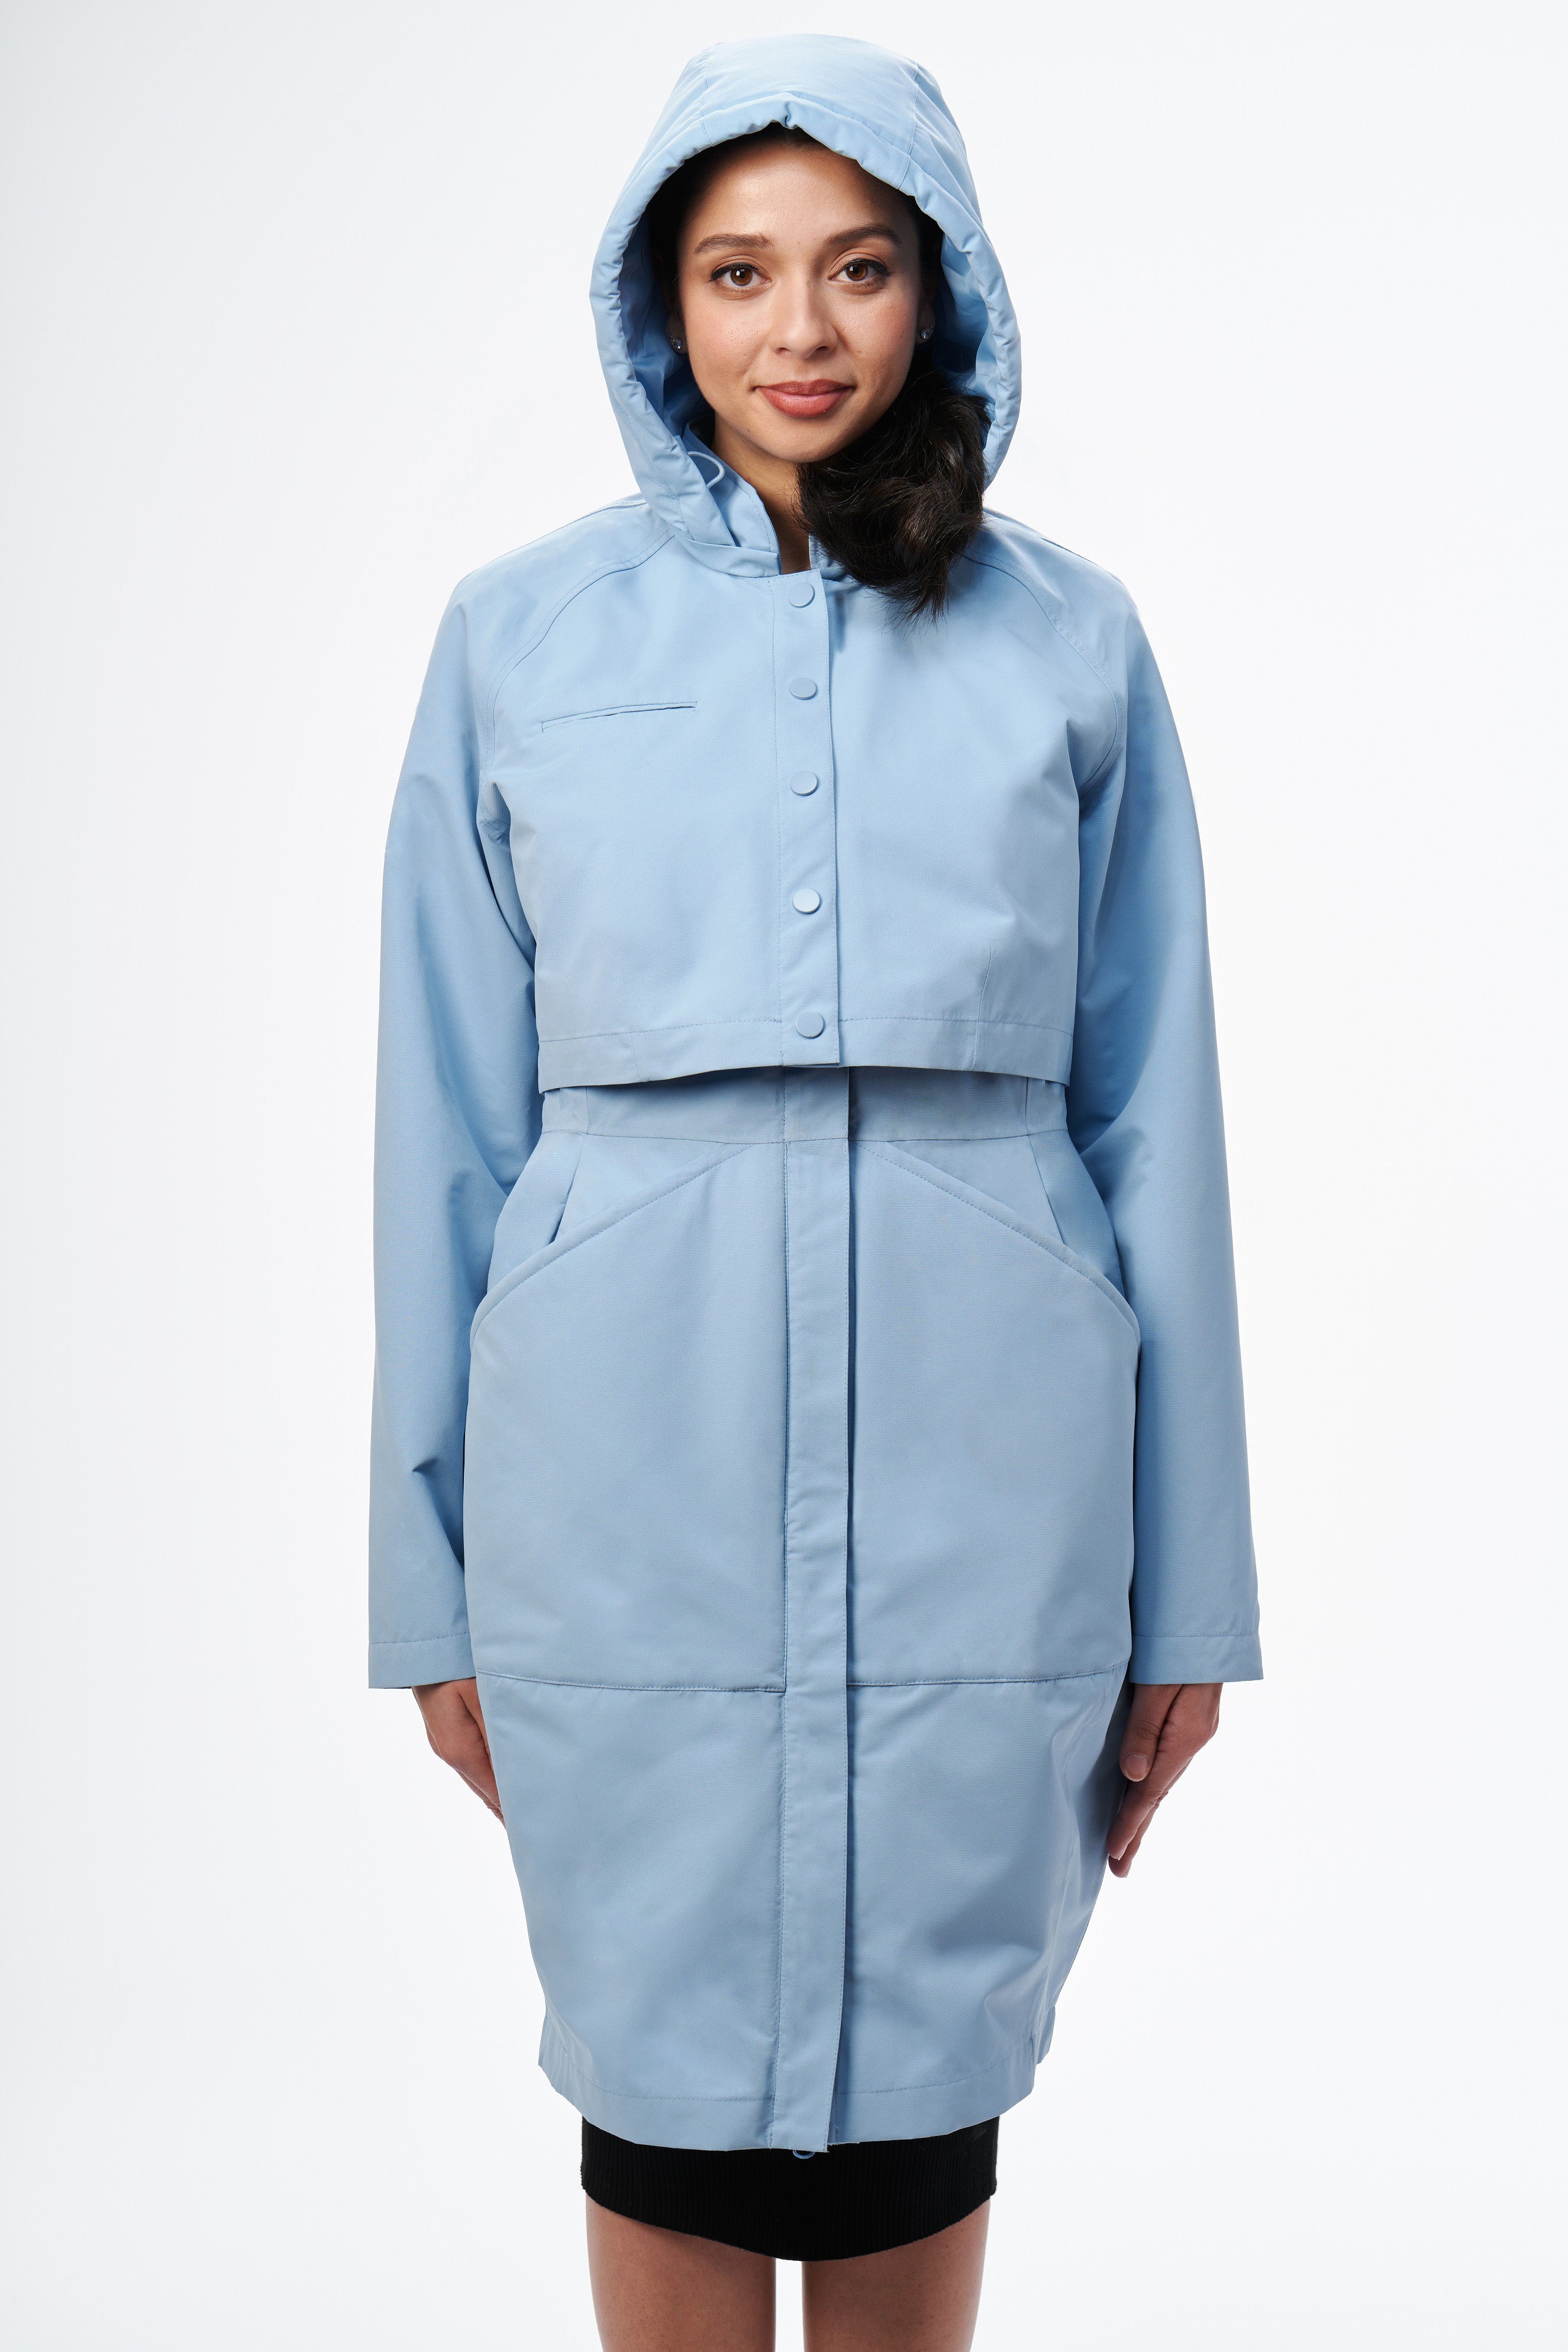 The Hourglass Raincoat Sustainable Light Blue Rain Jacket